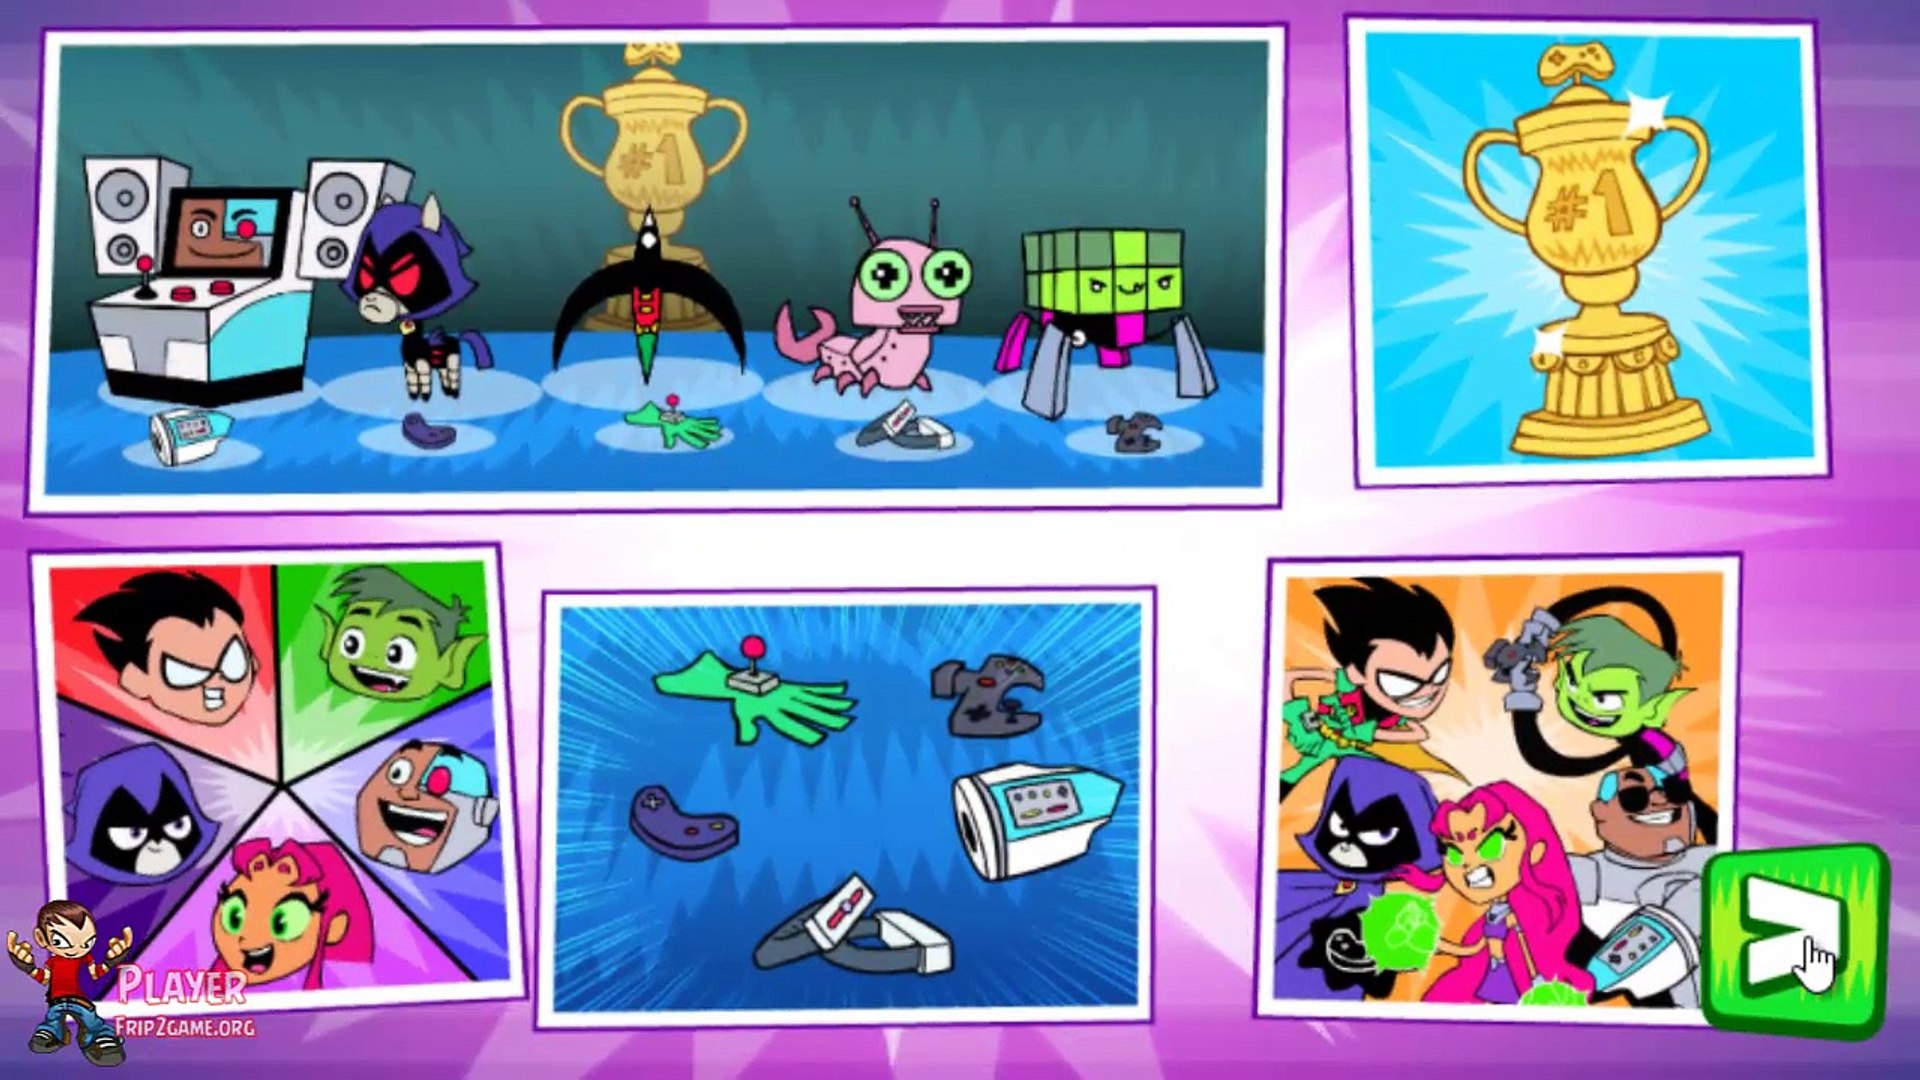 Teen Titans Go: Jump Jousts - Cartoon Network Games - video Dailymotion